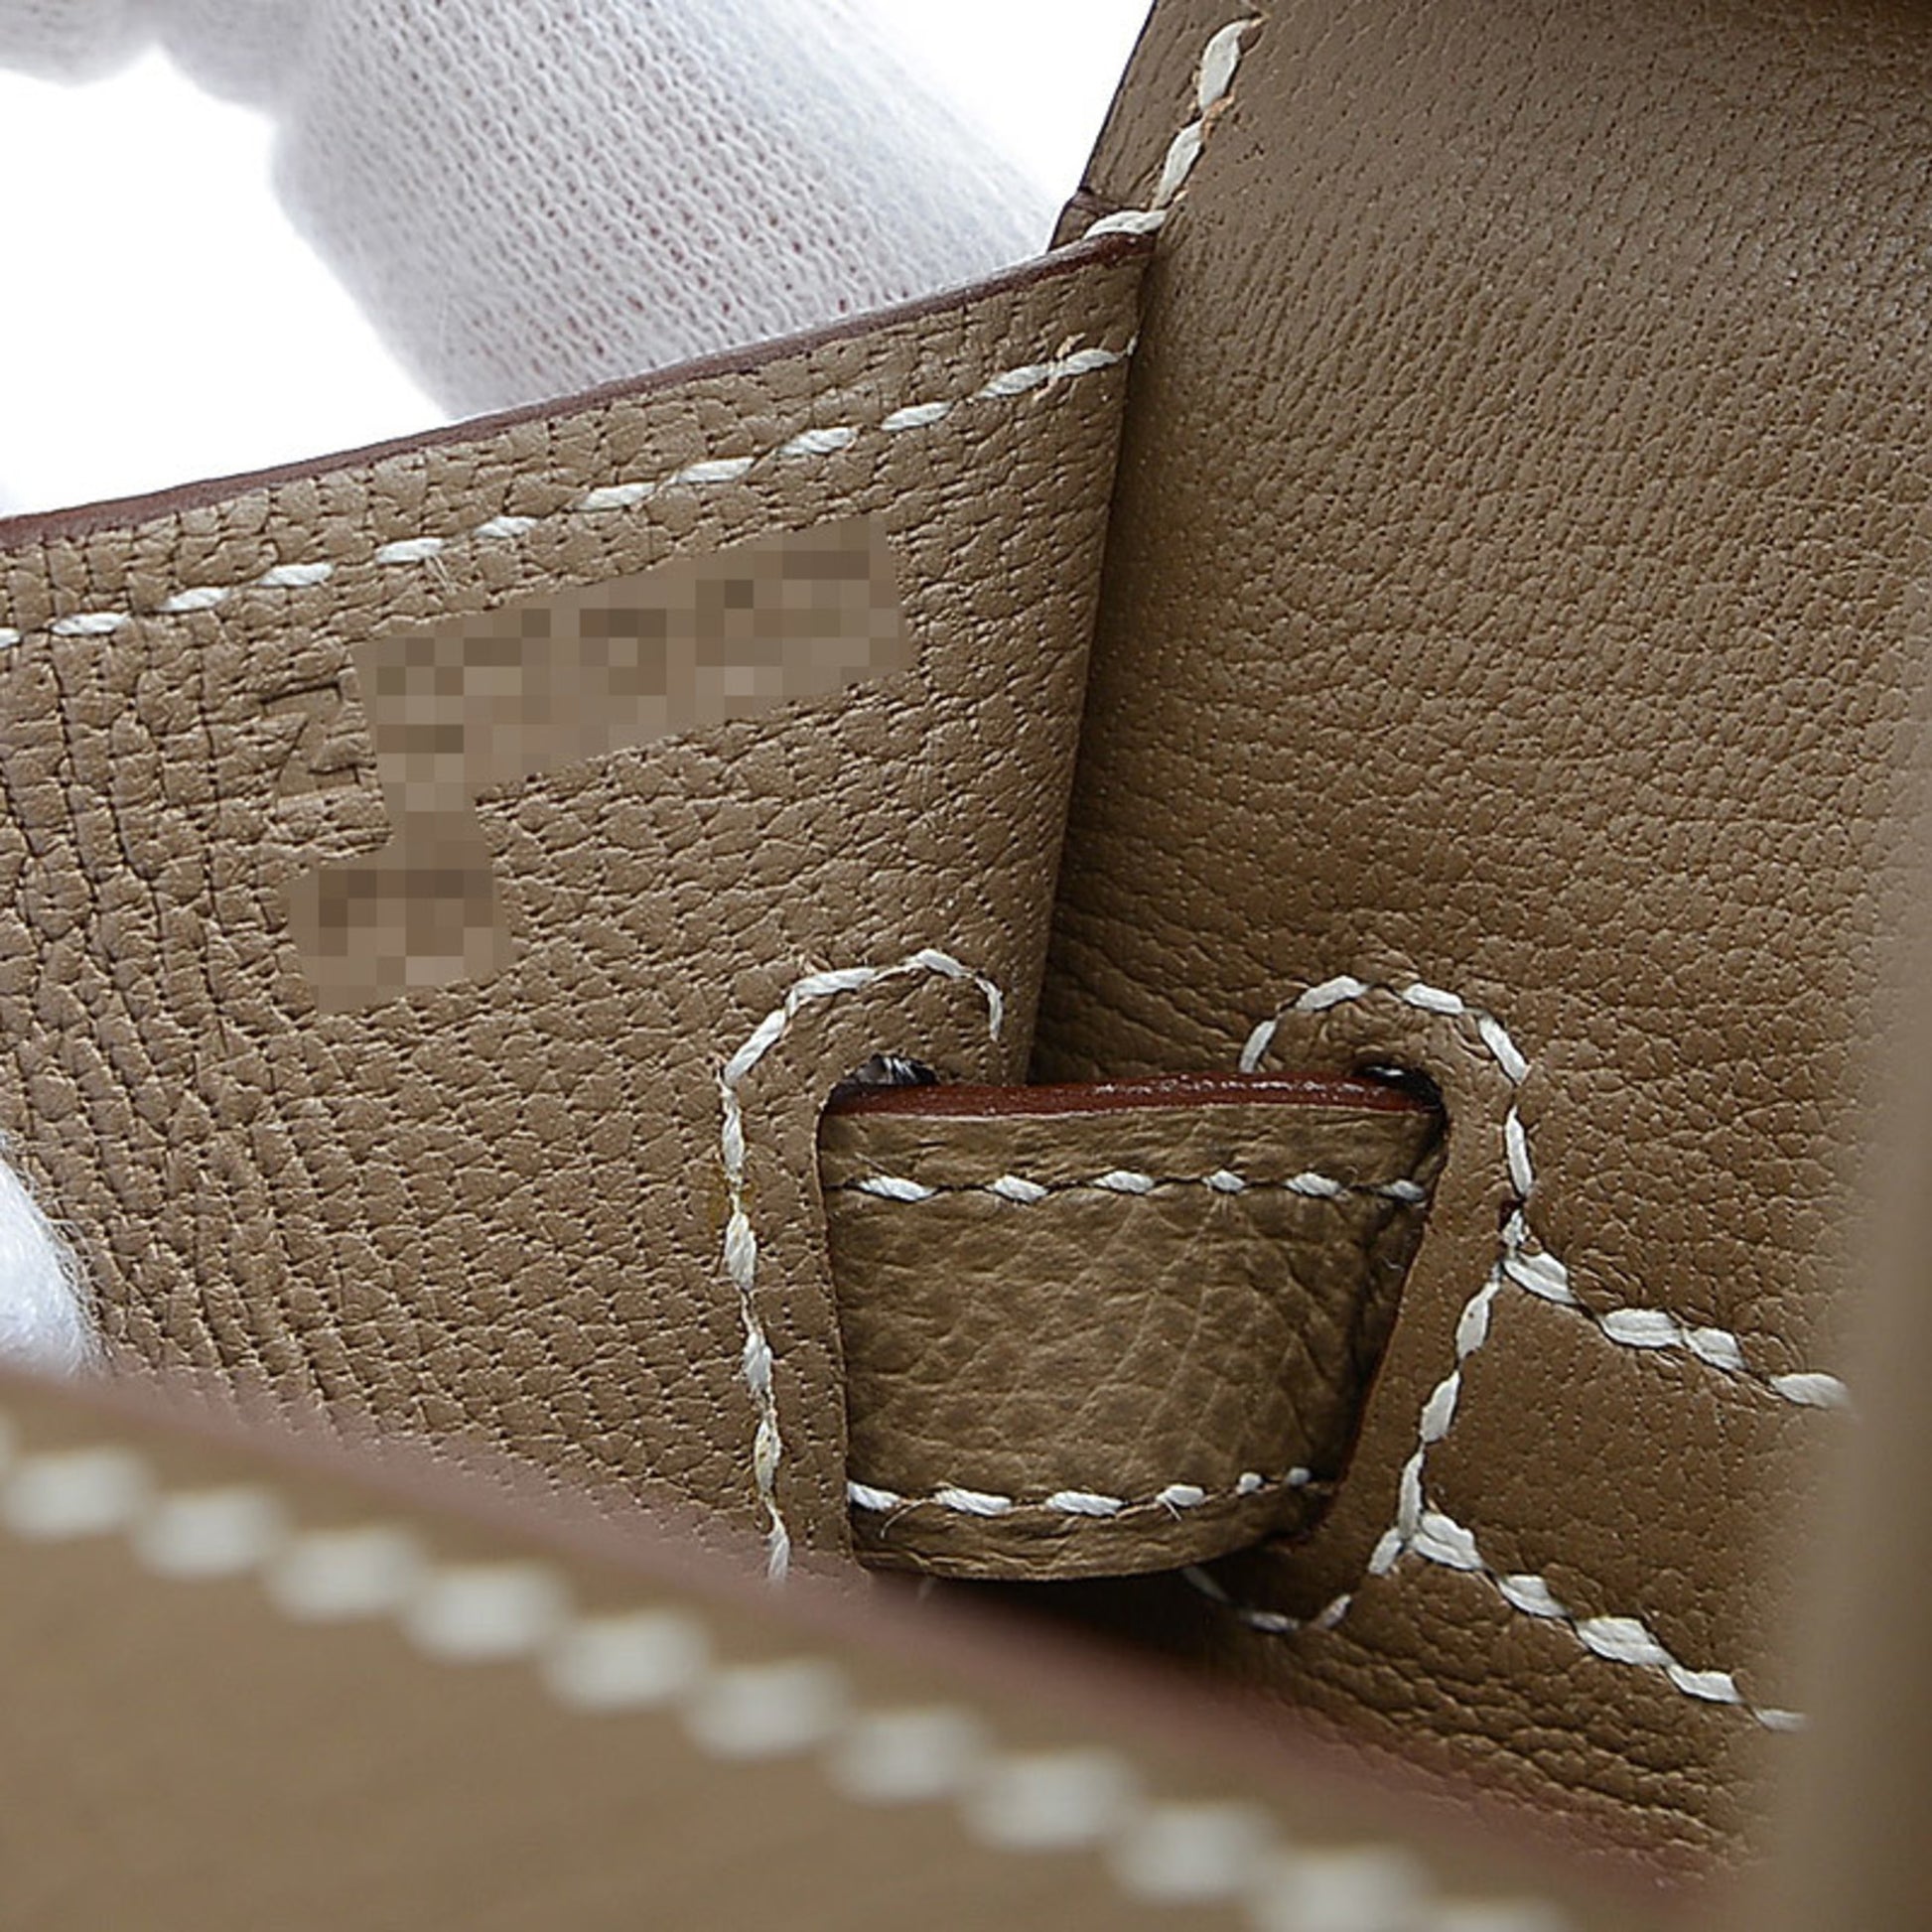 Hermès Birkin 25 cm Handbag in Etoupe Epsom Leather